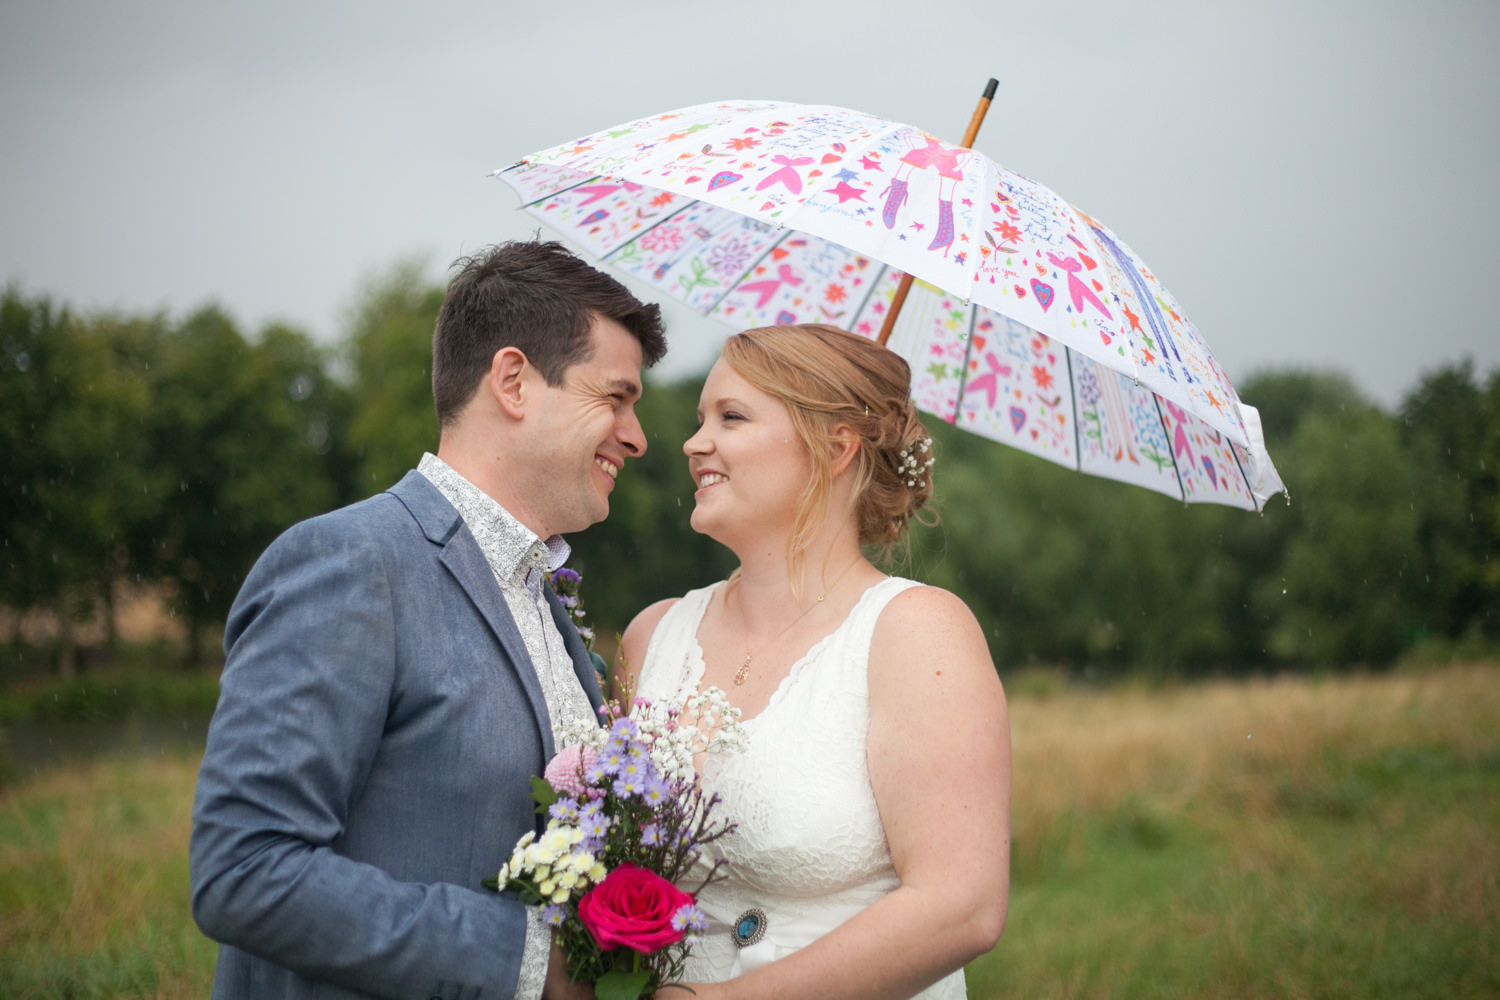 Gina & Simon, August 2016. Colourful Barn Wedding Photography at Furtho Manor Farm in Milton Keynes